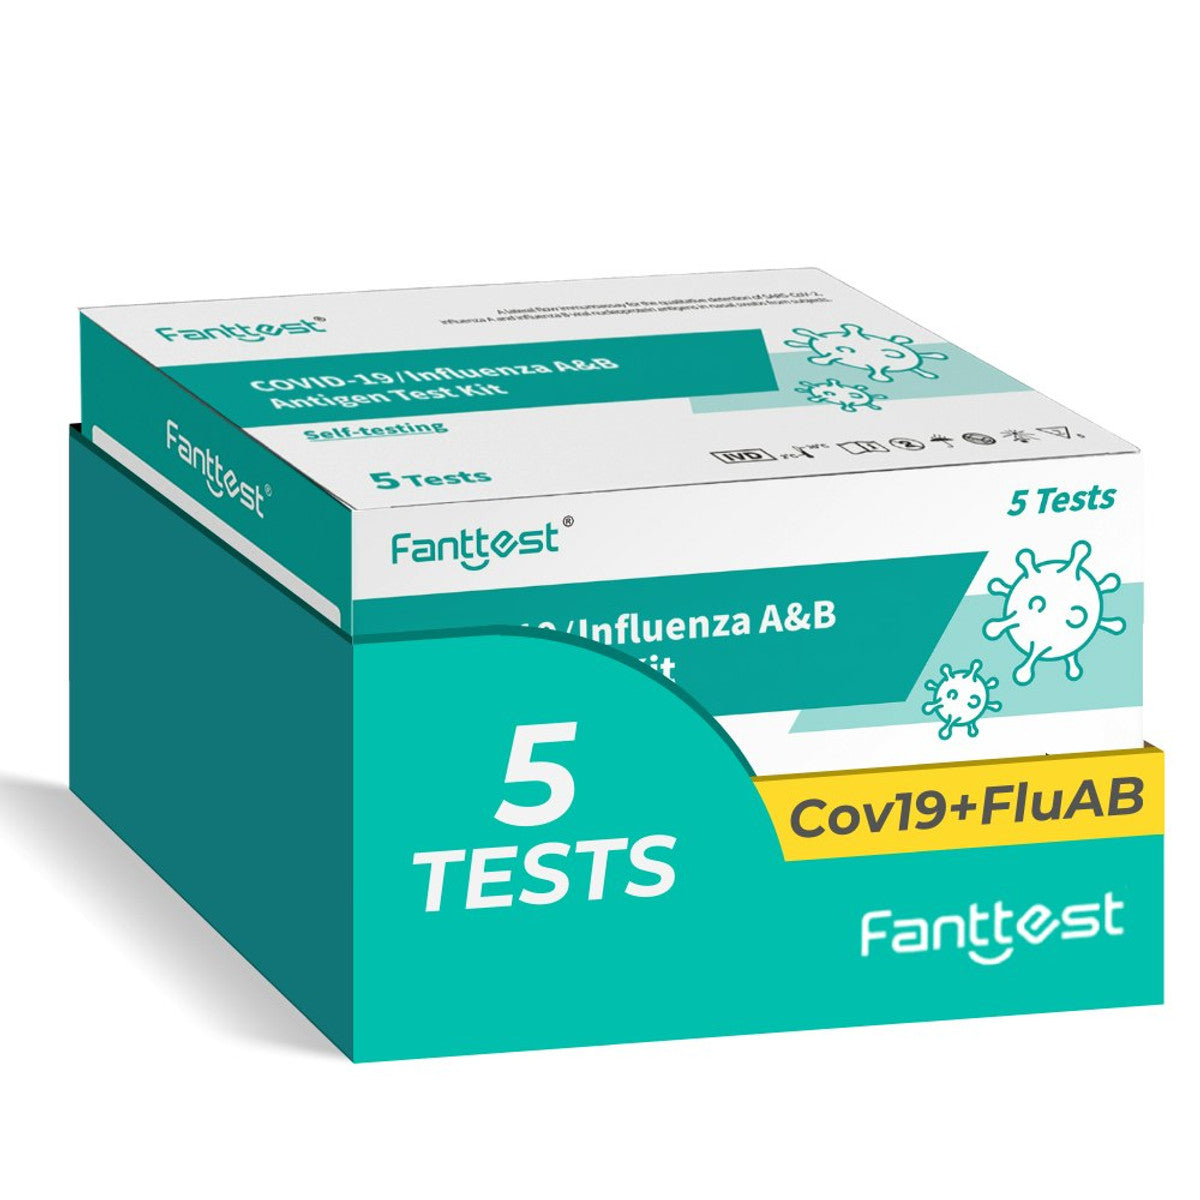 Fanttest (Nasal) COVID -19 / Influenza A & B Rapid Antigen Test Kit (3-in-1) - 5 Tests (1 x 5 Pack)